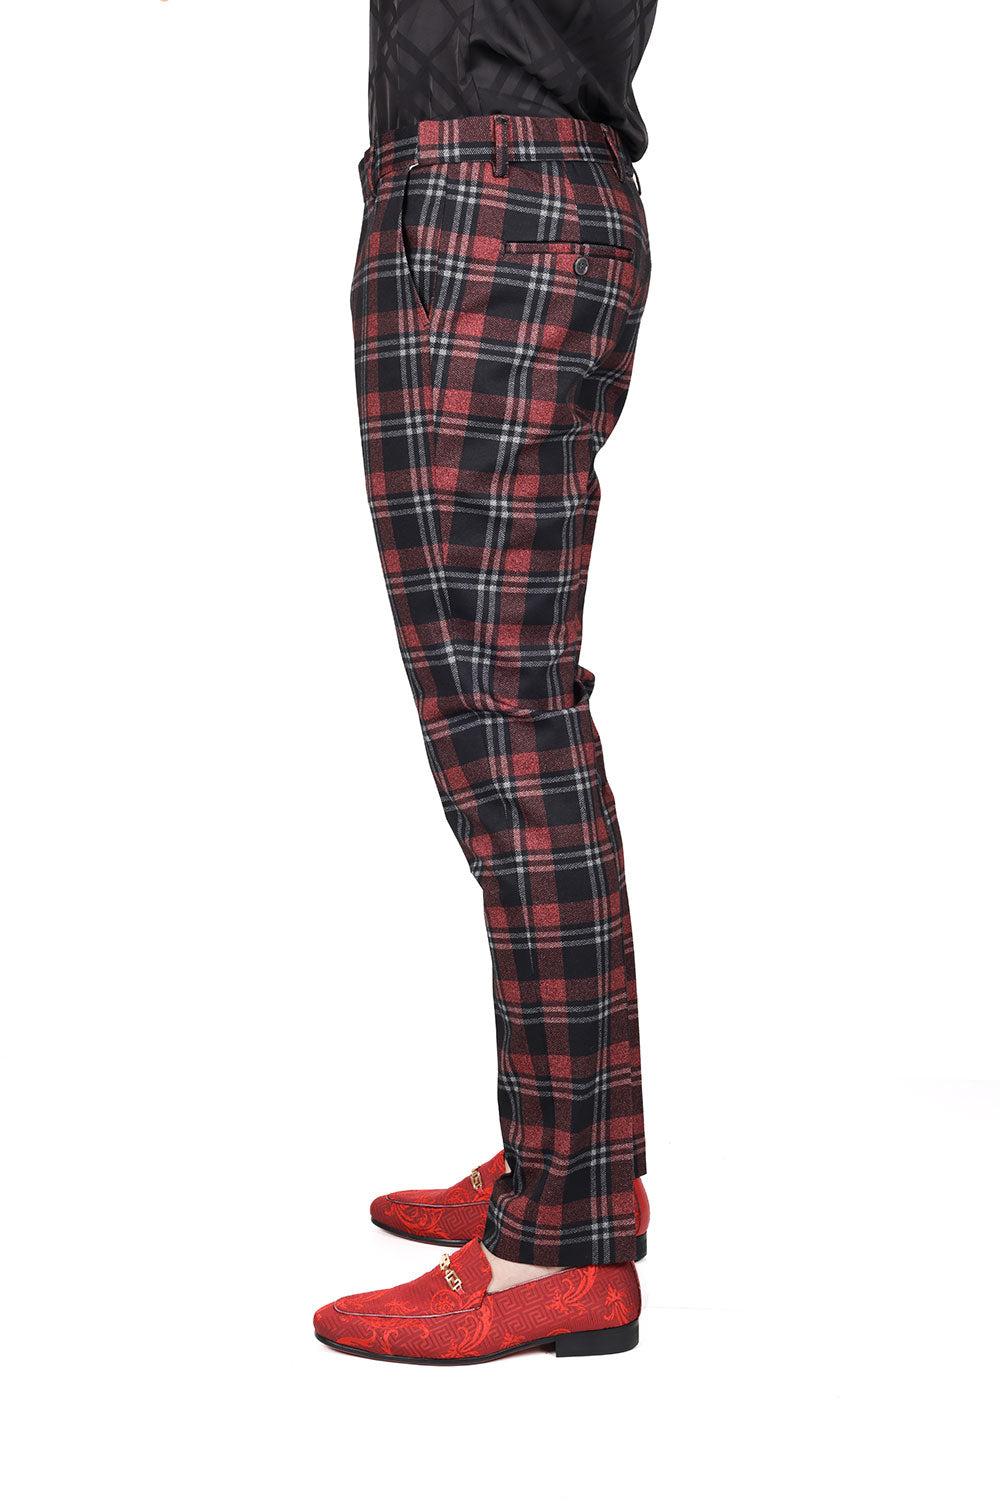 BARABAS men's luxury checkered plaid black red chino pants CP155 Black Red